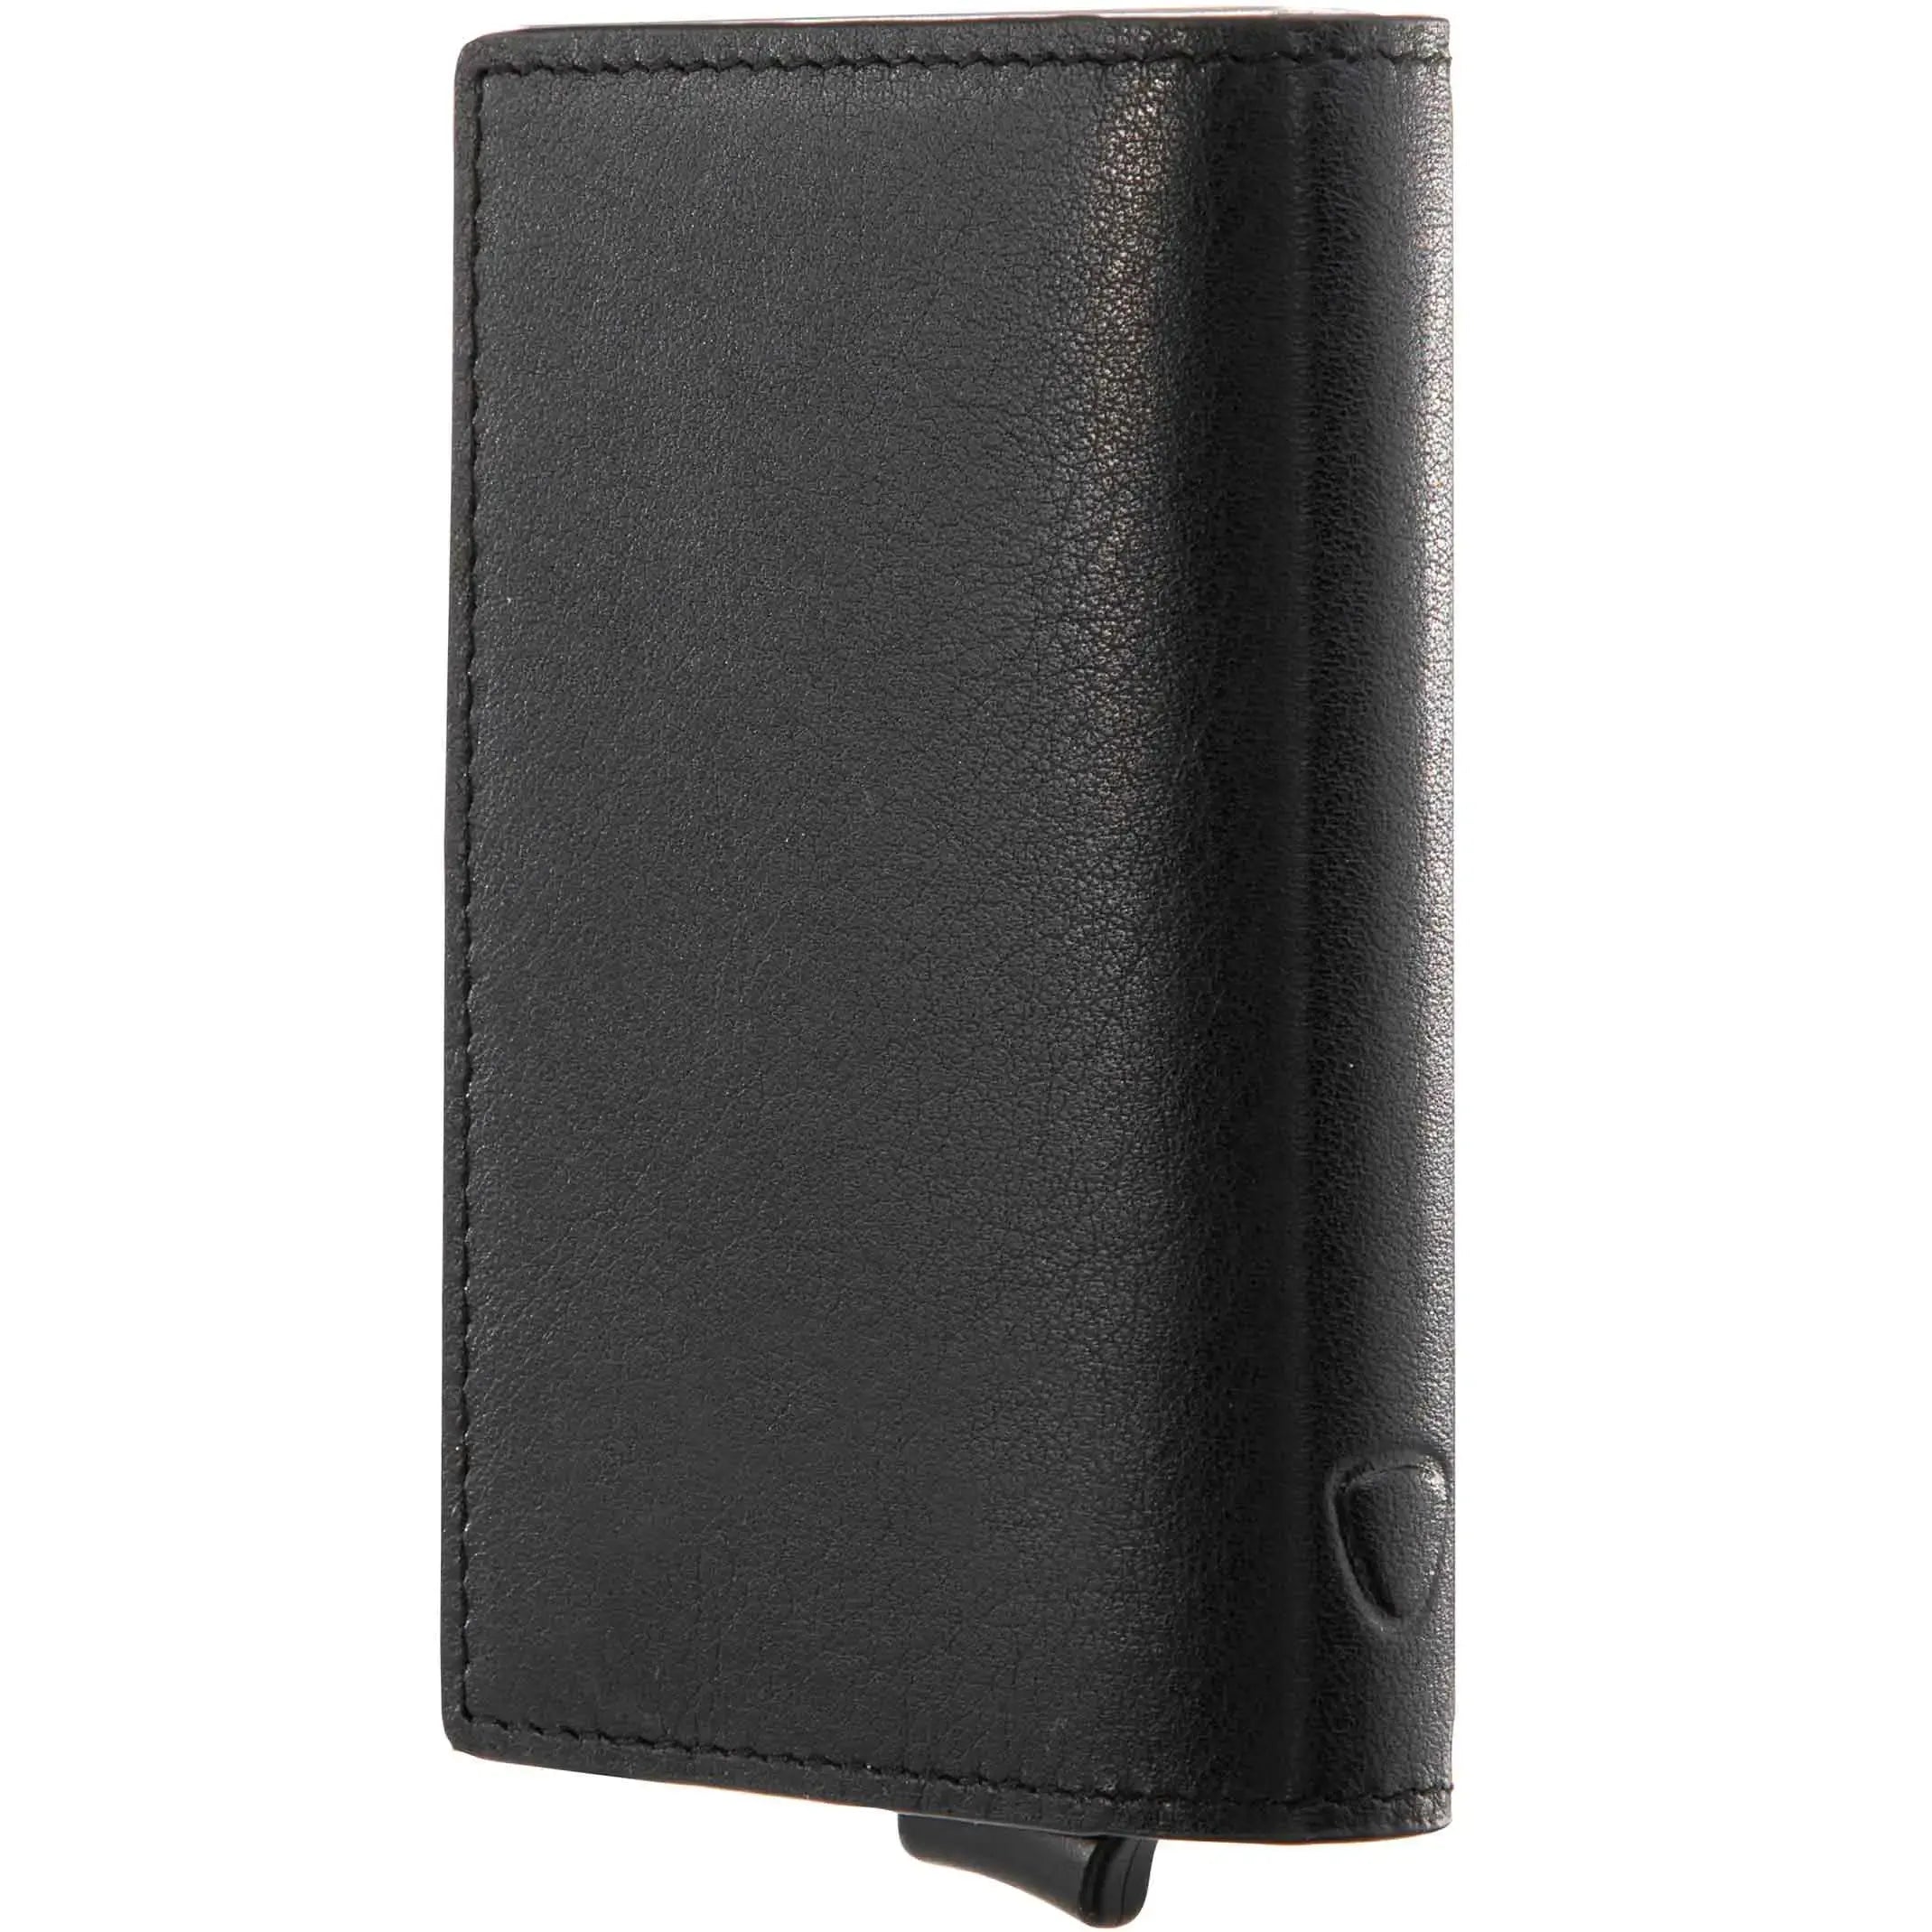 Strellson Carter C-One E-Cage SV8 wallet 10 cm - Black